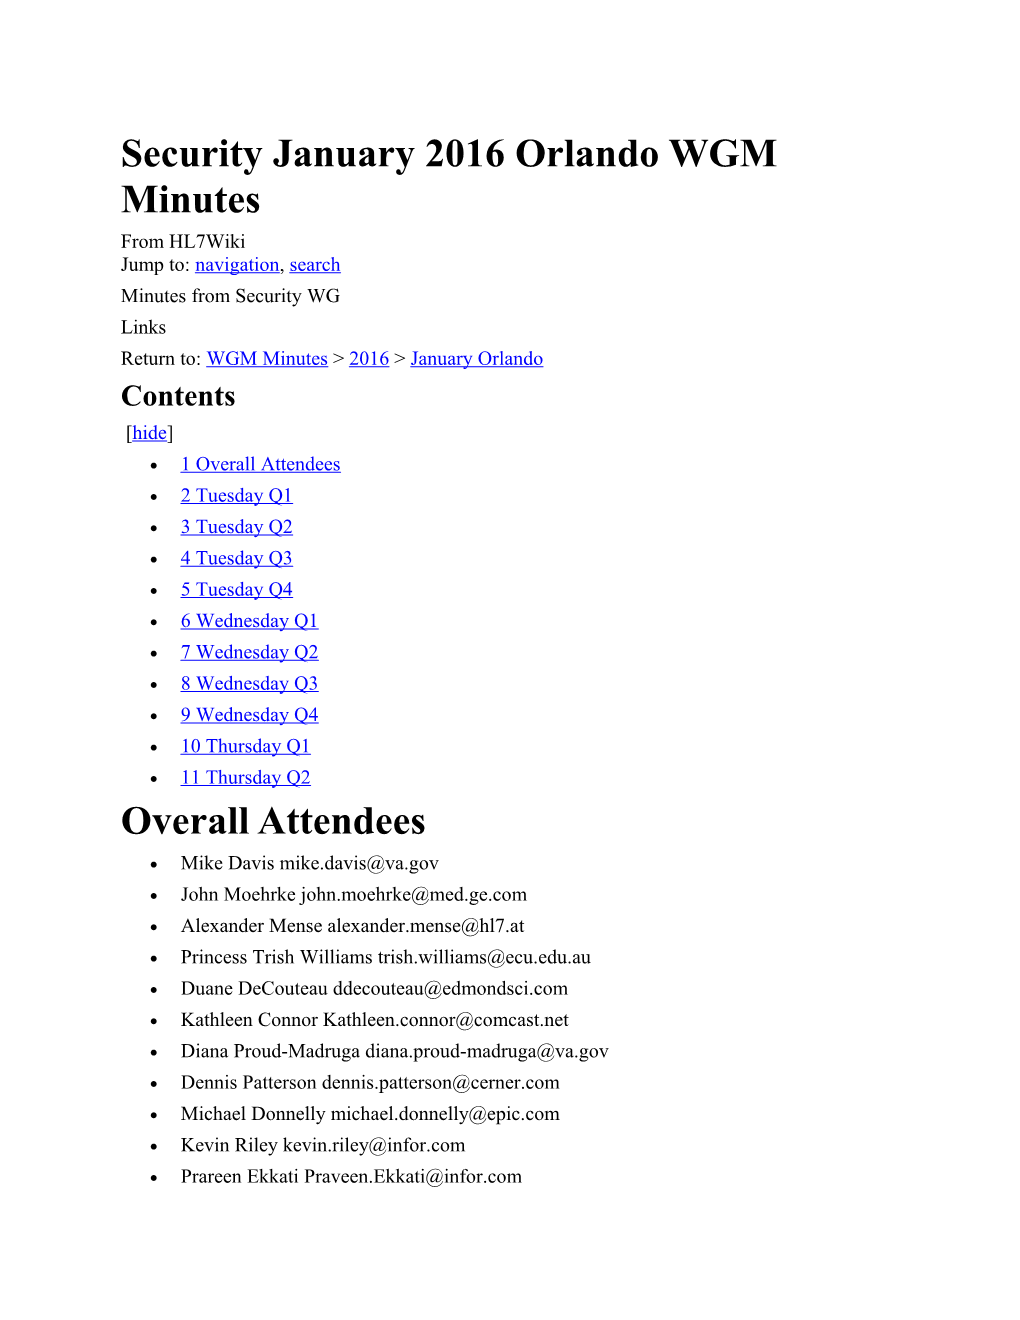 Security January 2016 Orlando WGM Minutes